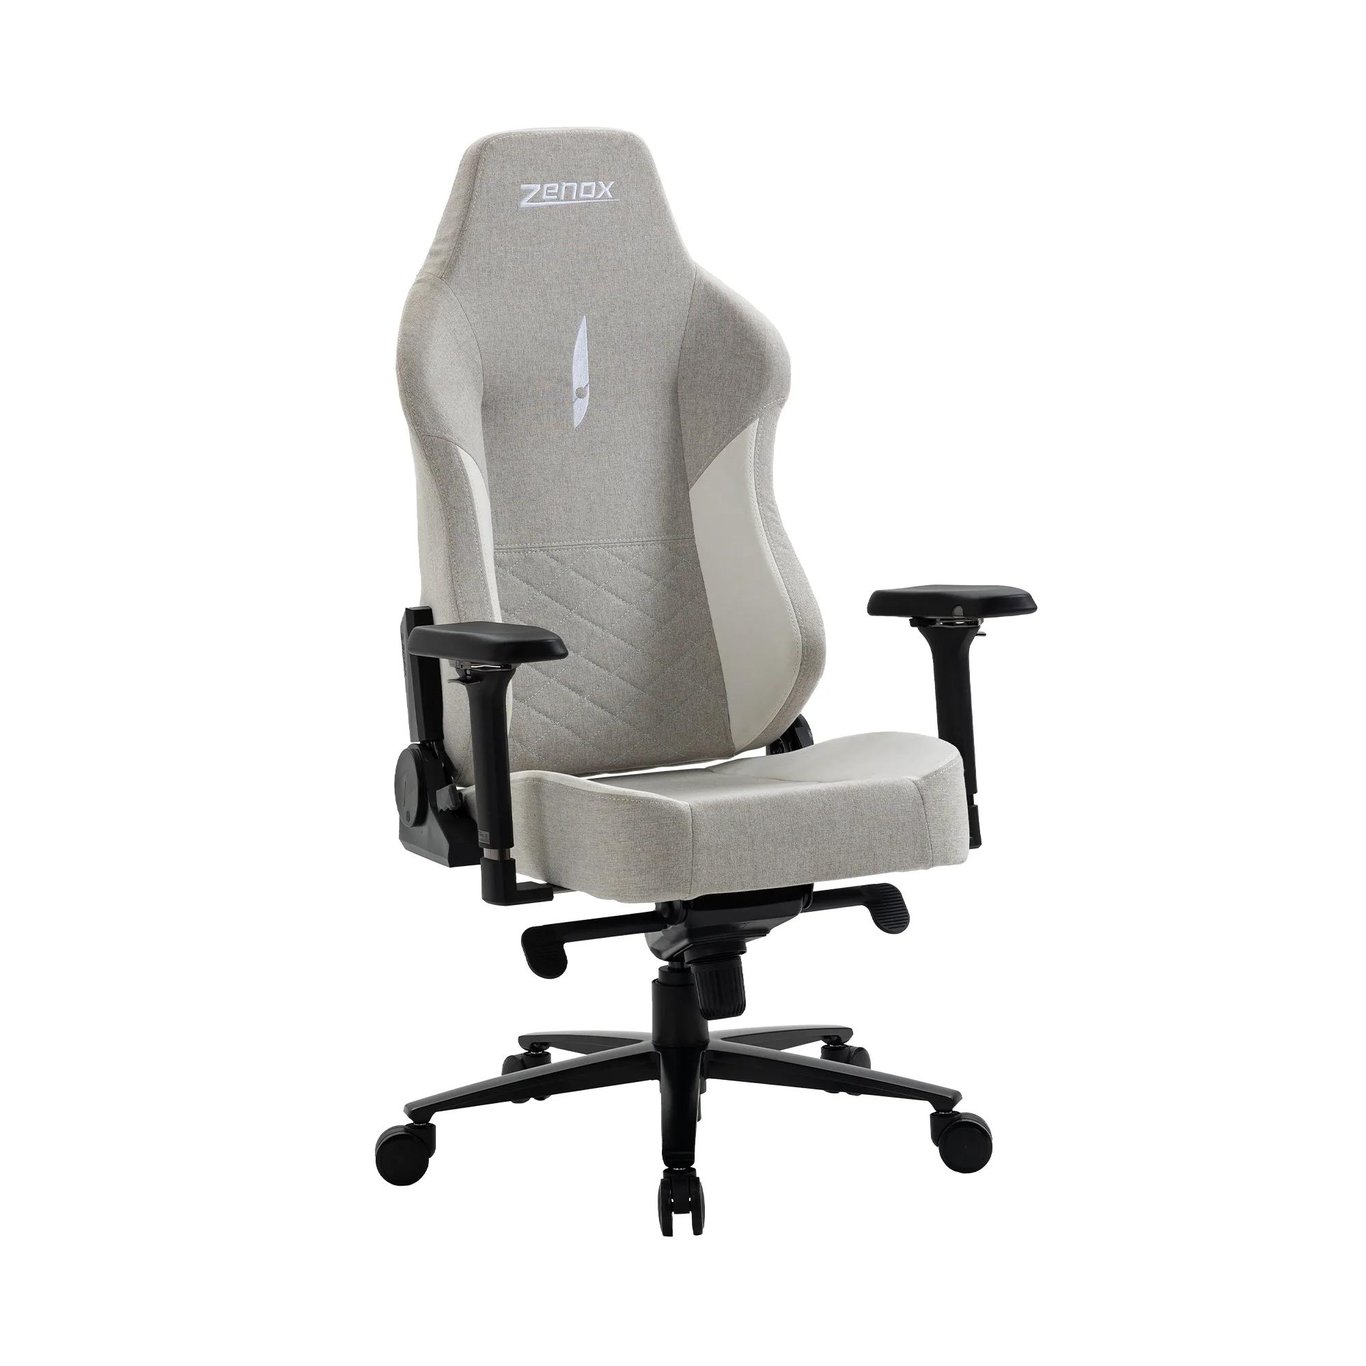 Zenox Spectre-MK2 Racing Chair  - Fabric/Light Grey /-3